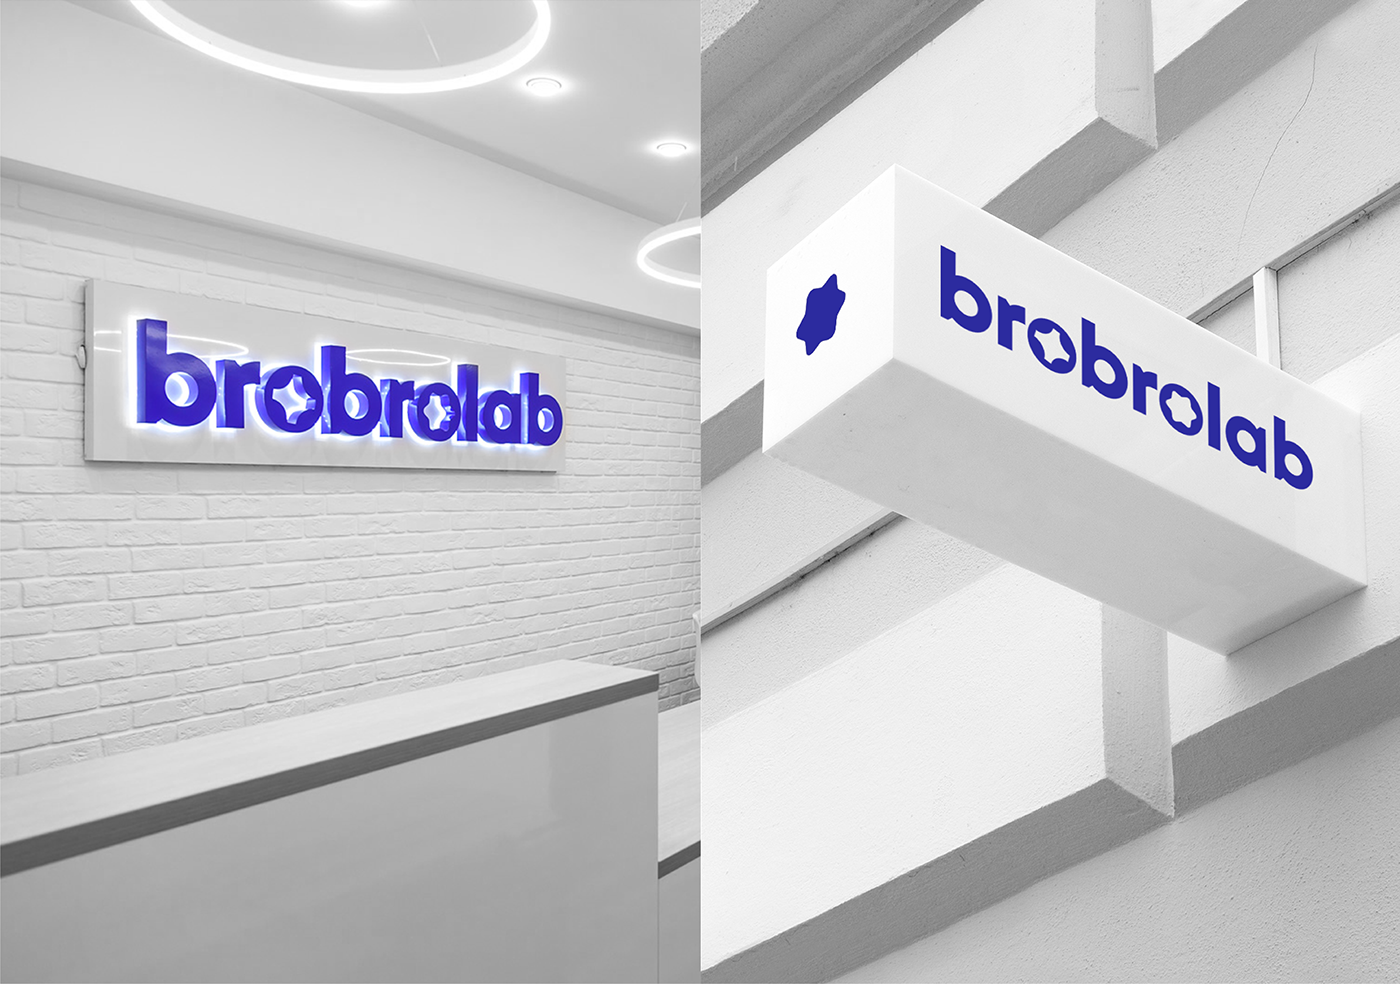 design brobrolab bro lab identity branding  graphic blue clean apple